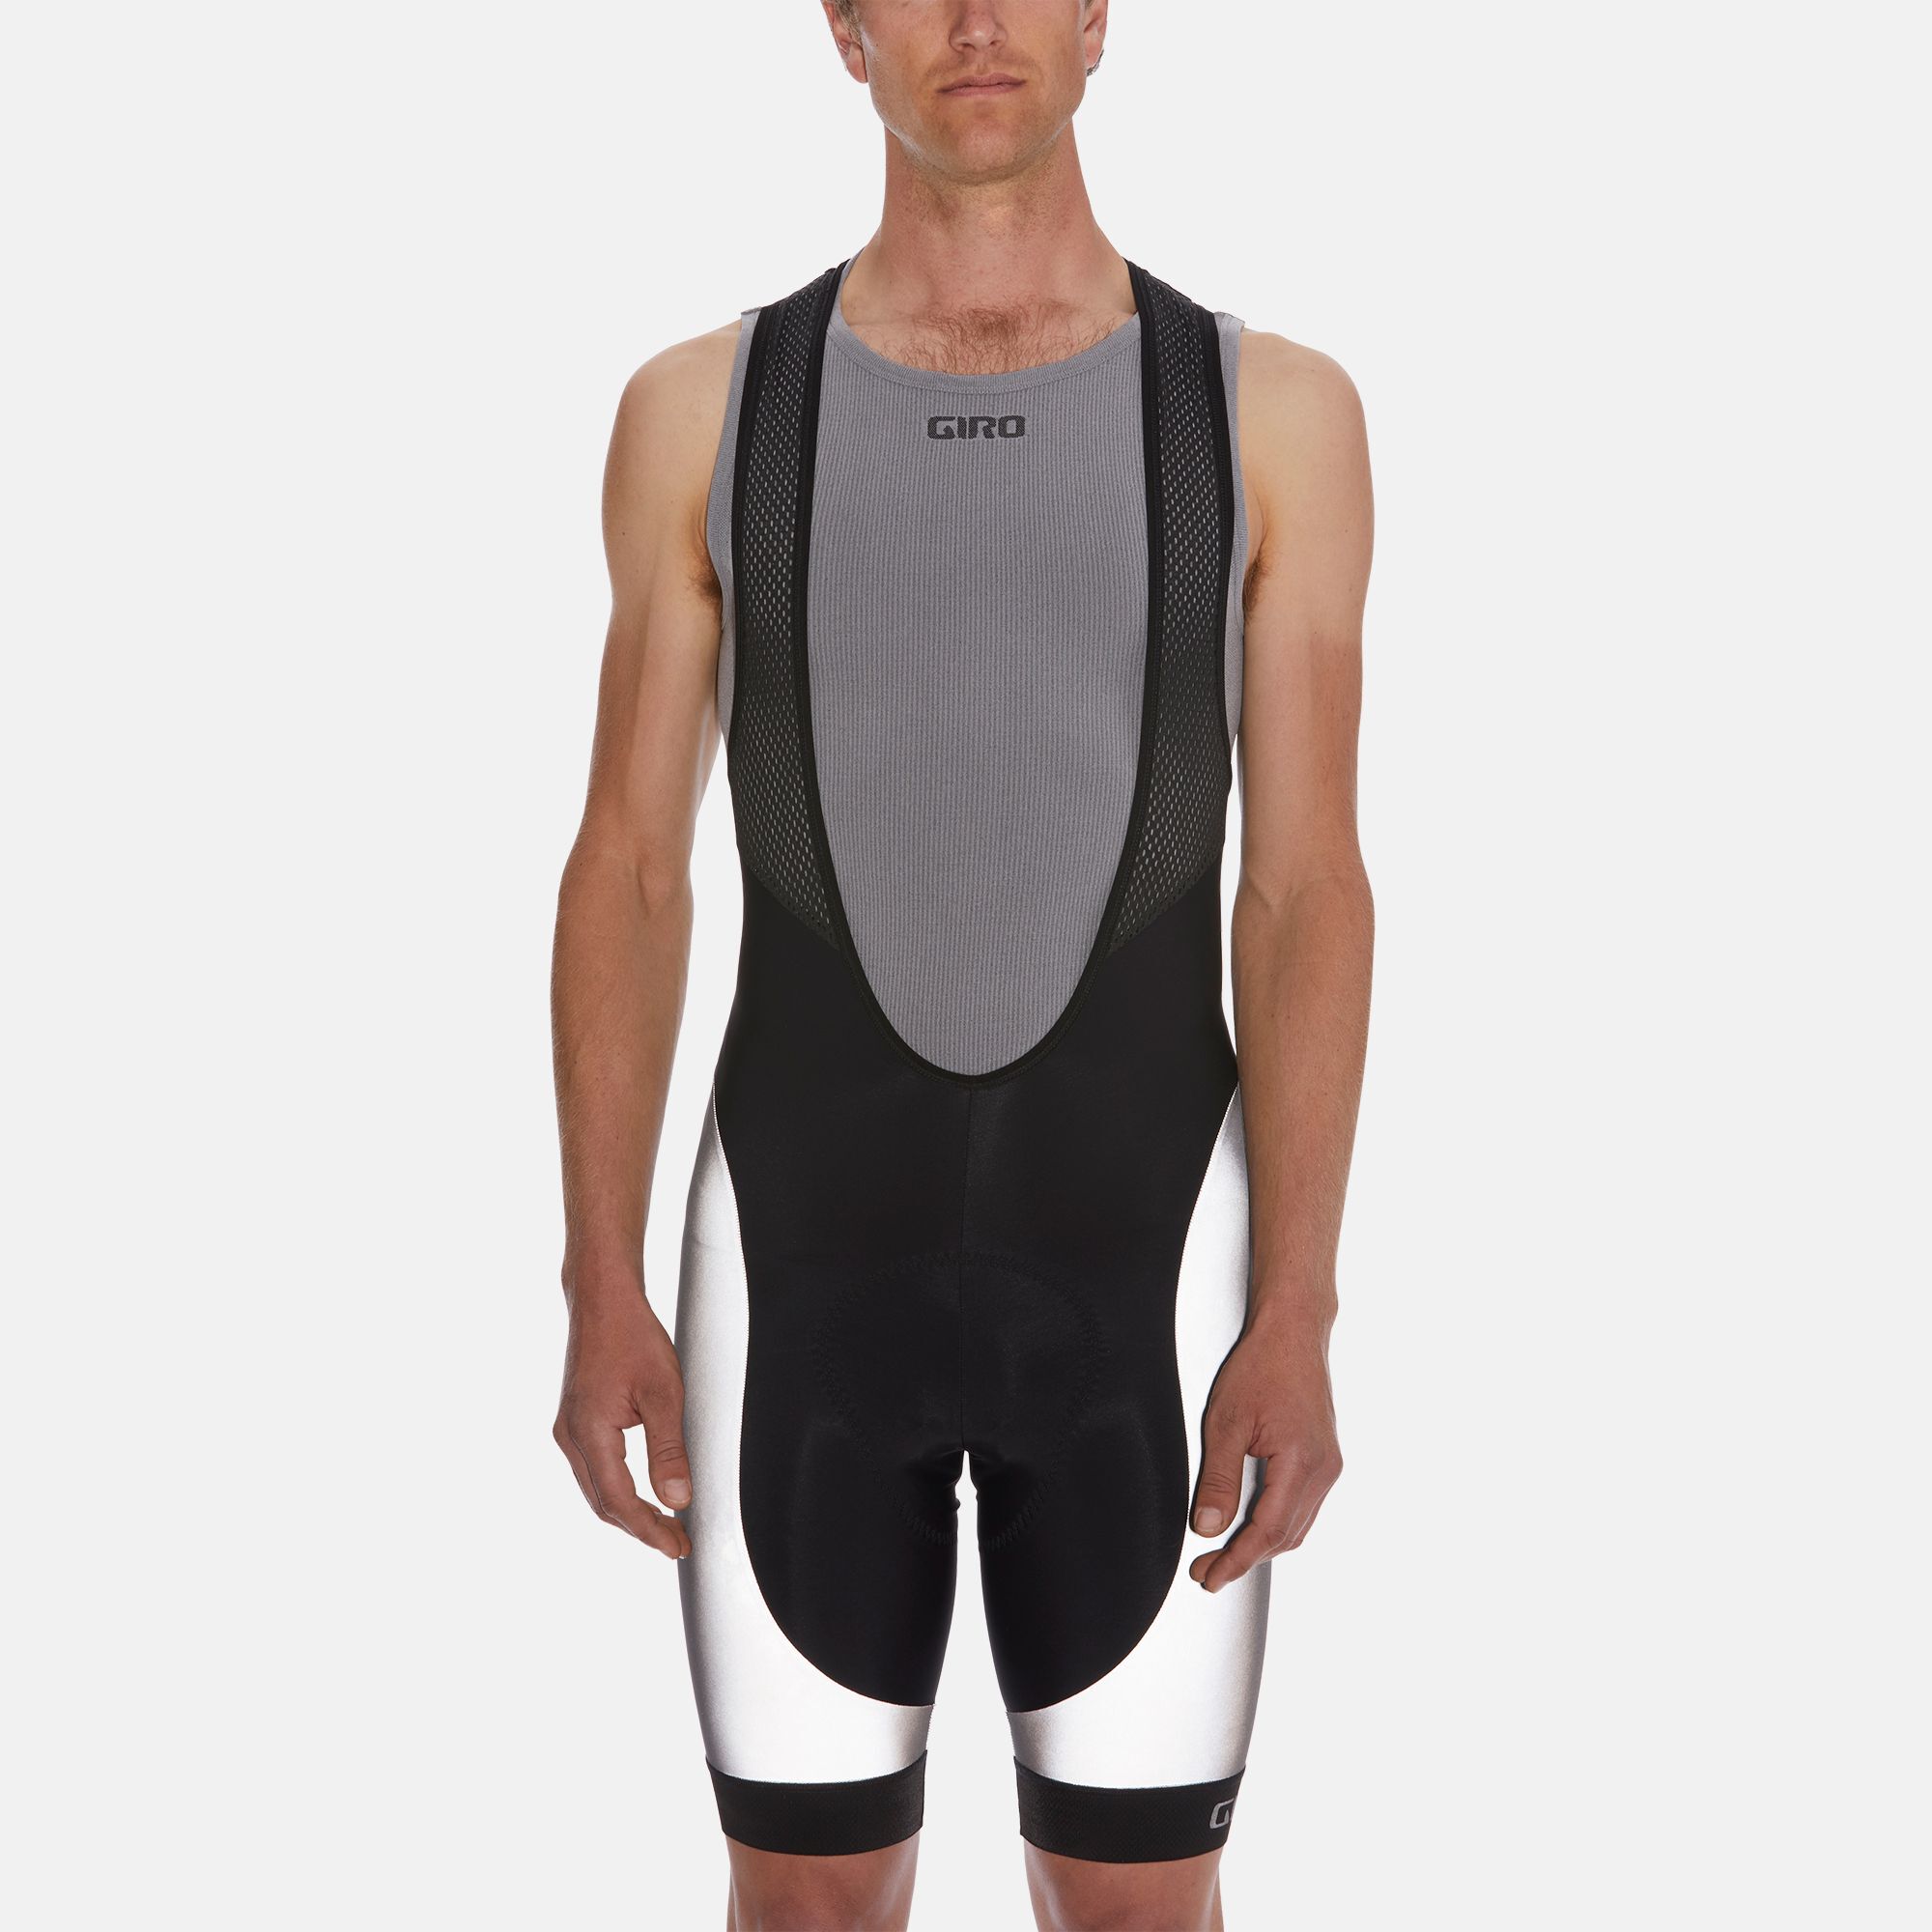 men's cycling apparel